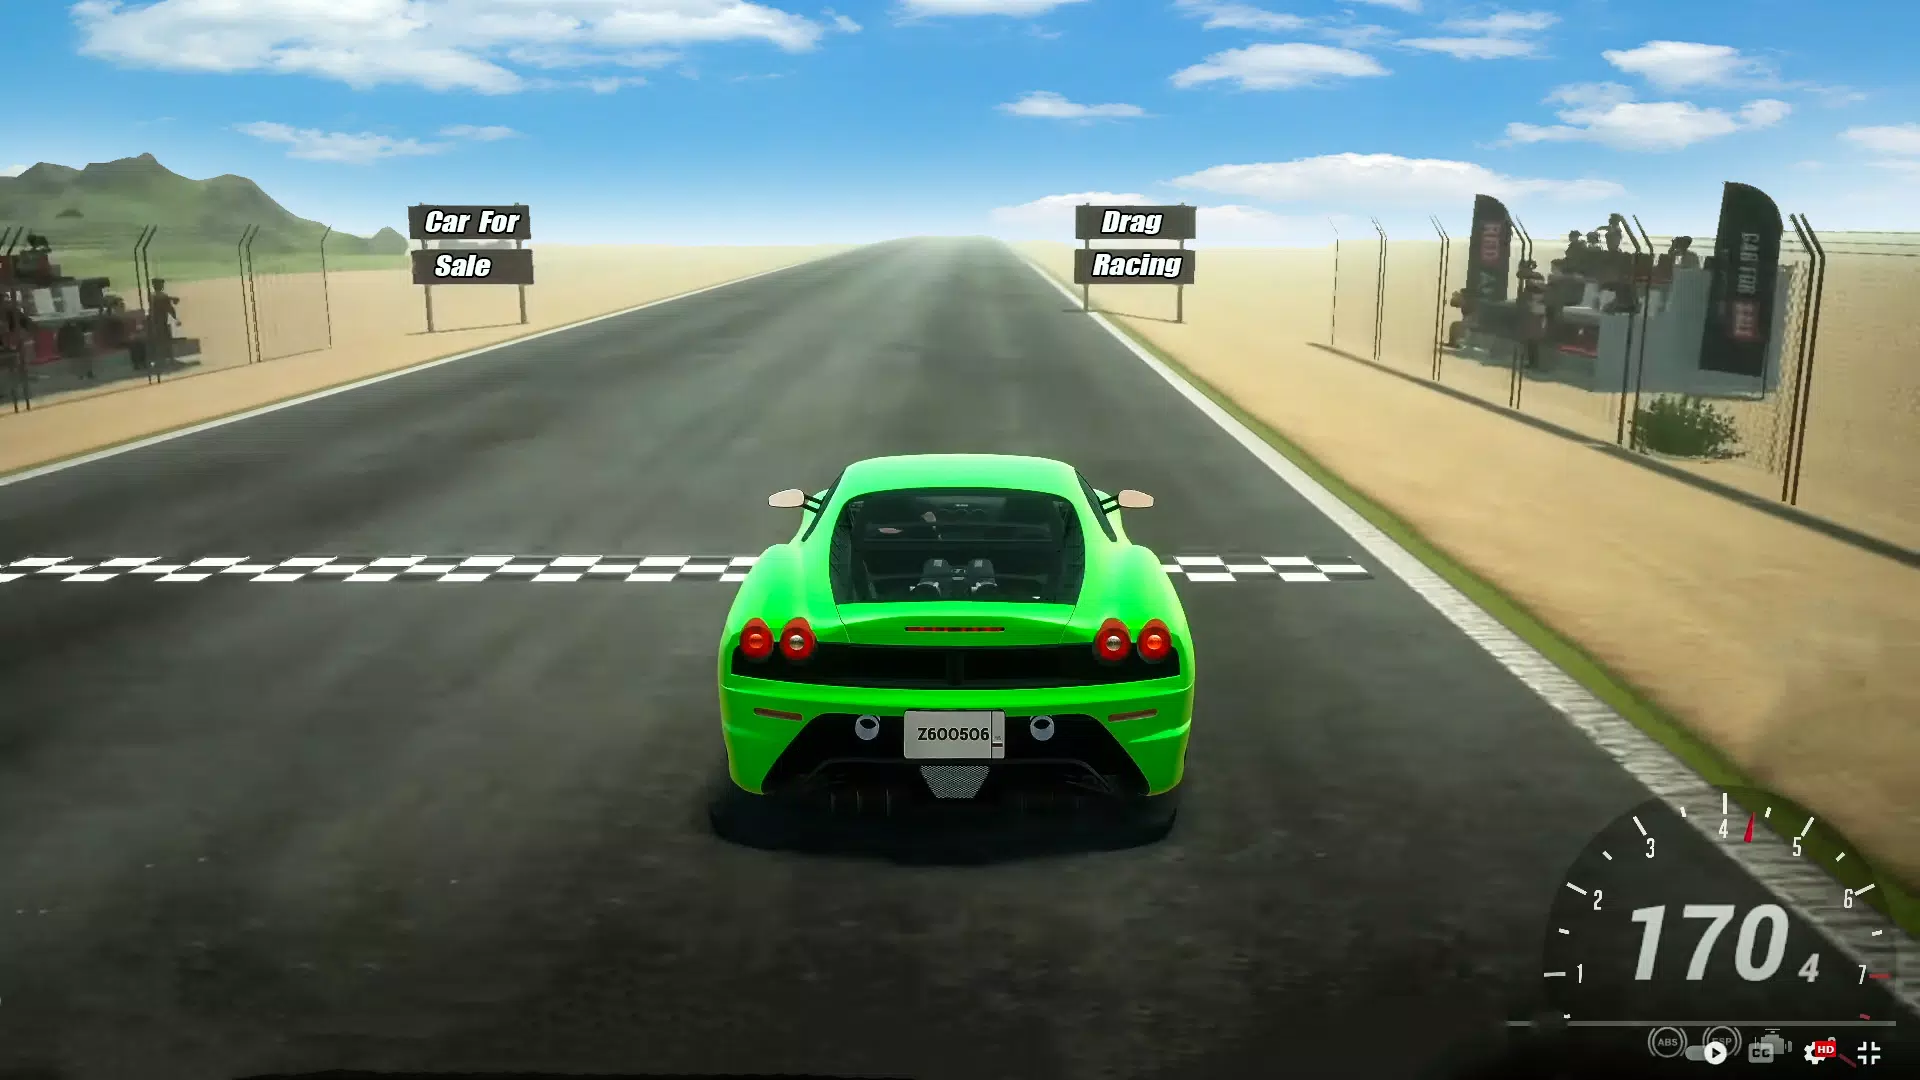 Ferrari Virtual Race Video - Free PC Car Racing Game 